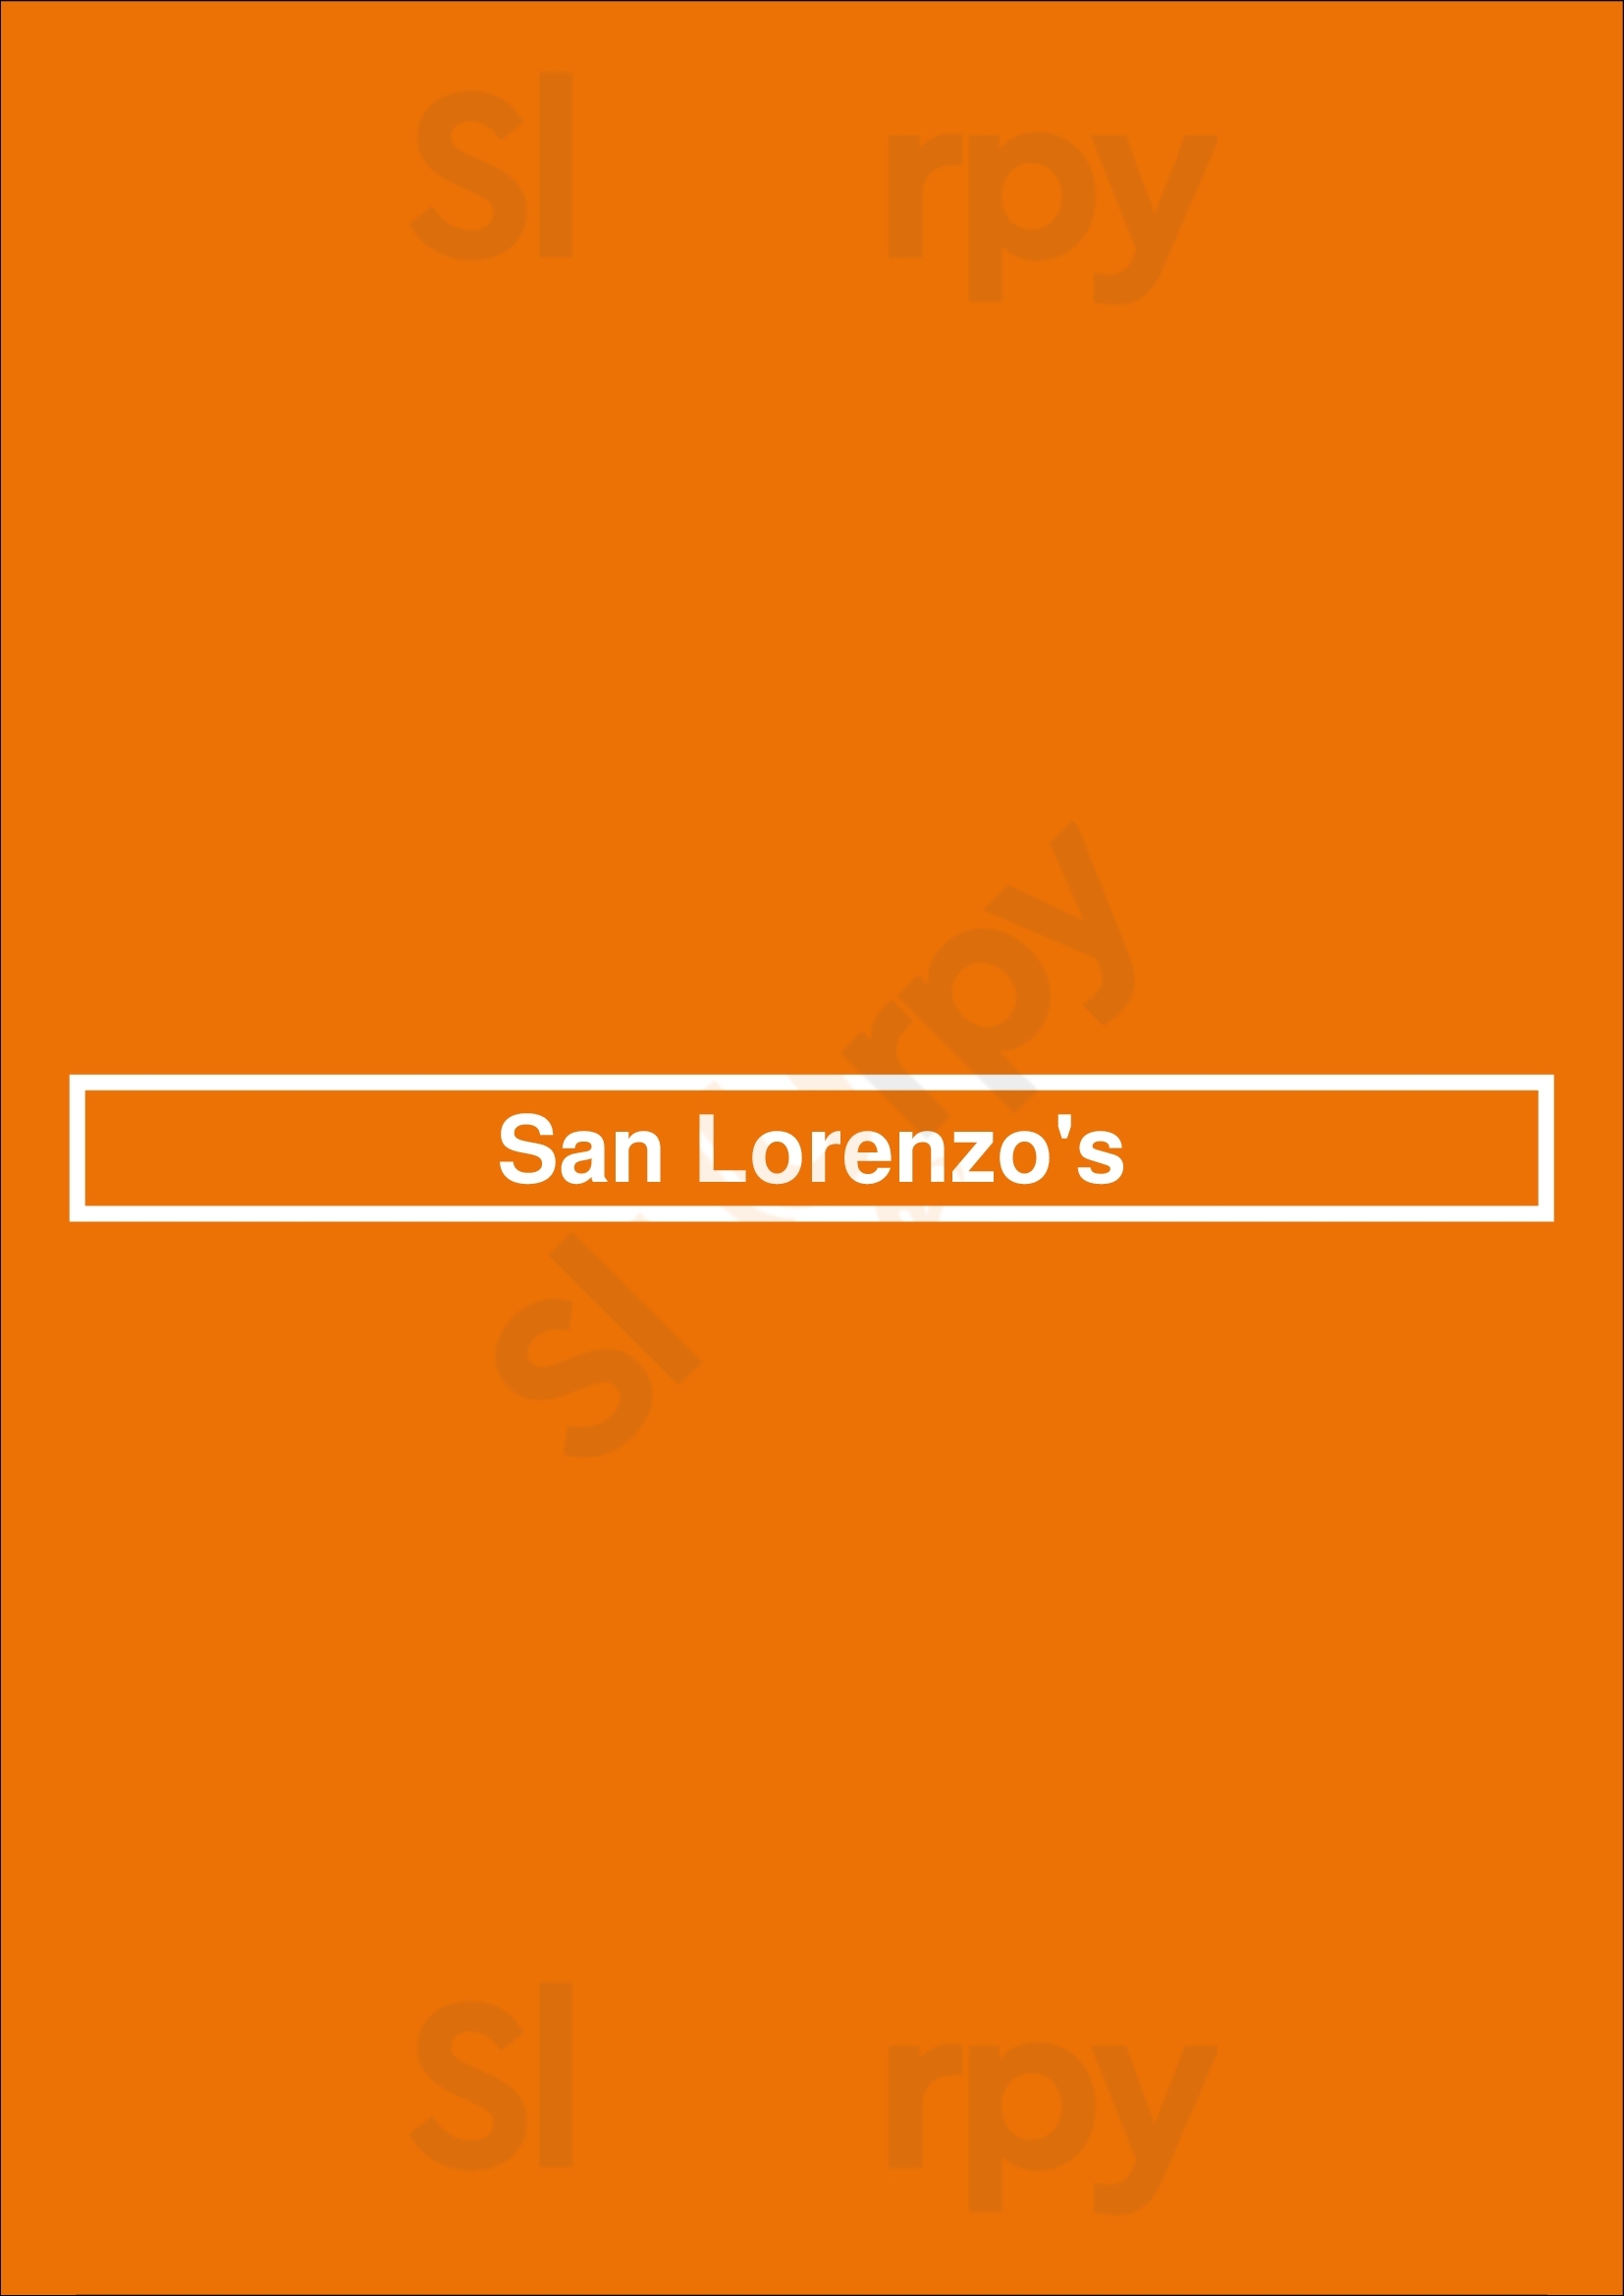 San Lorenzo's Dublin Menu - 1